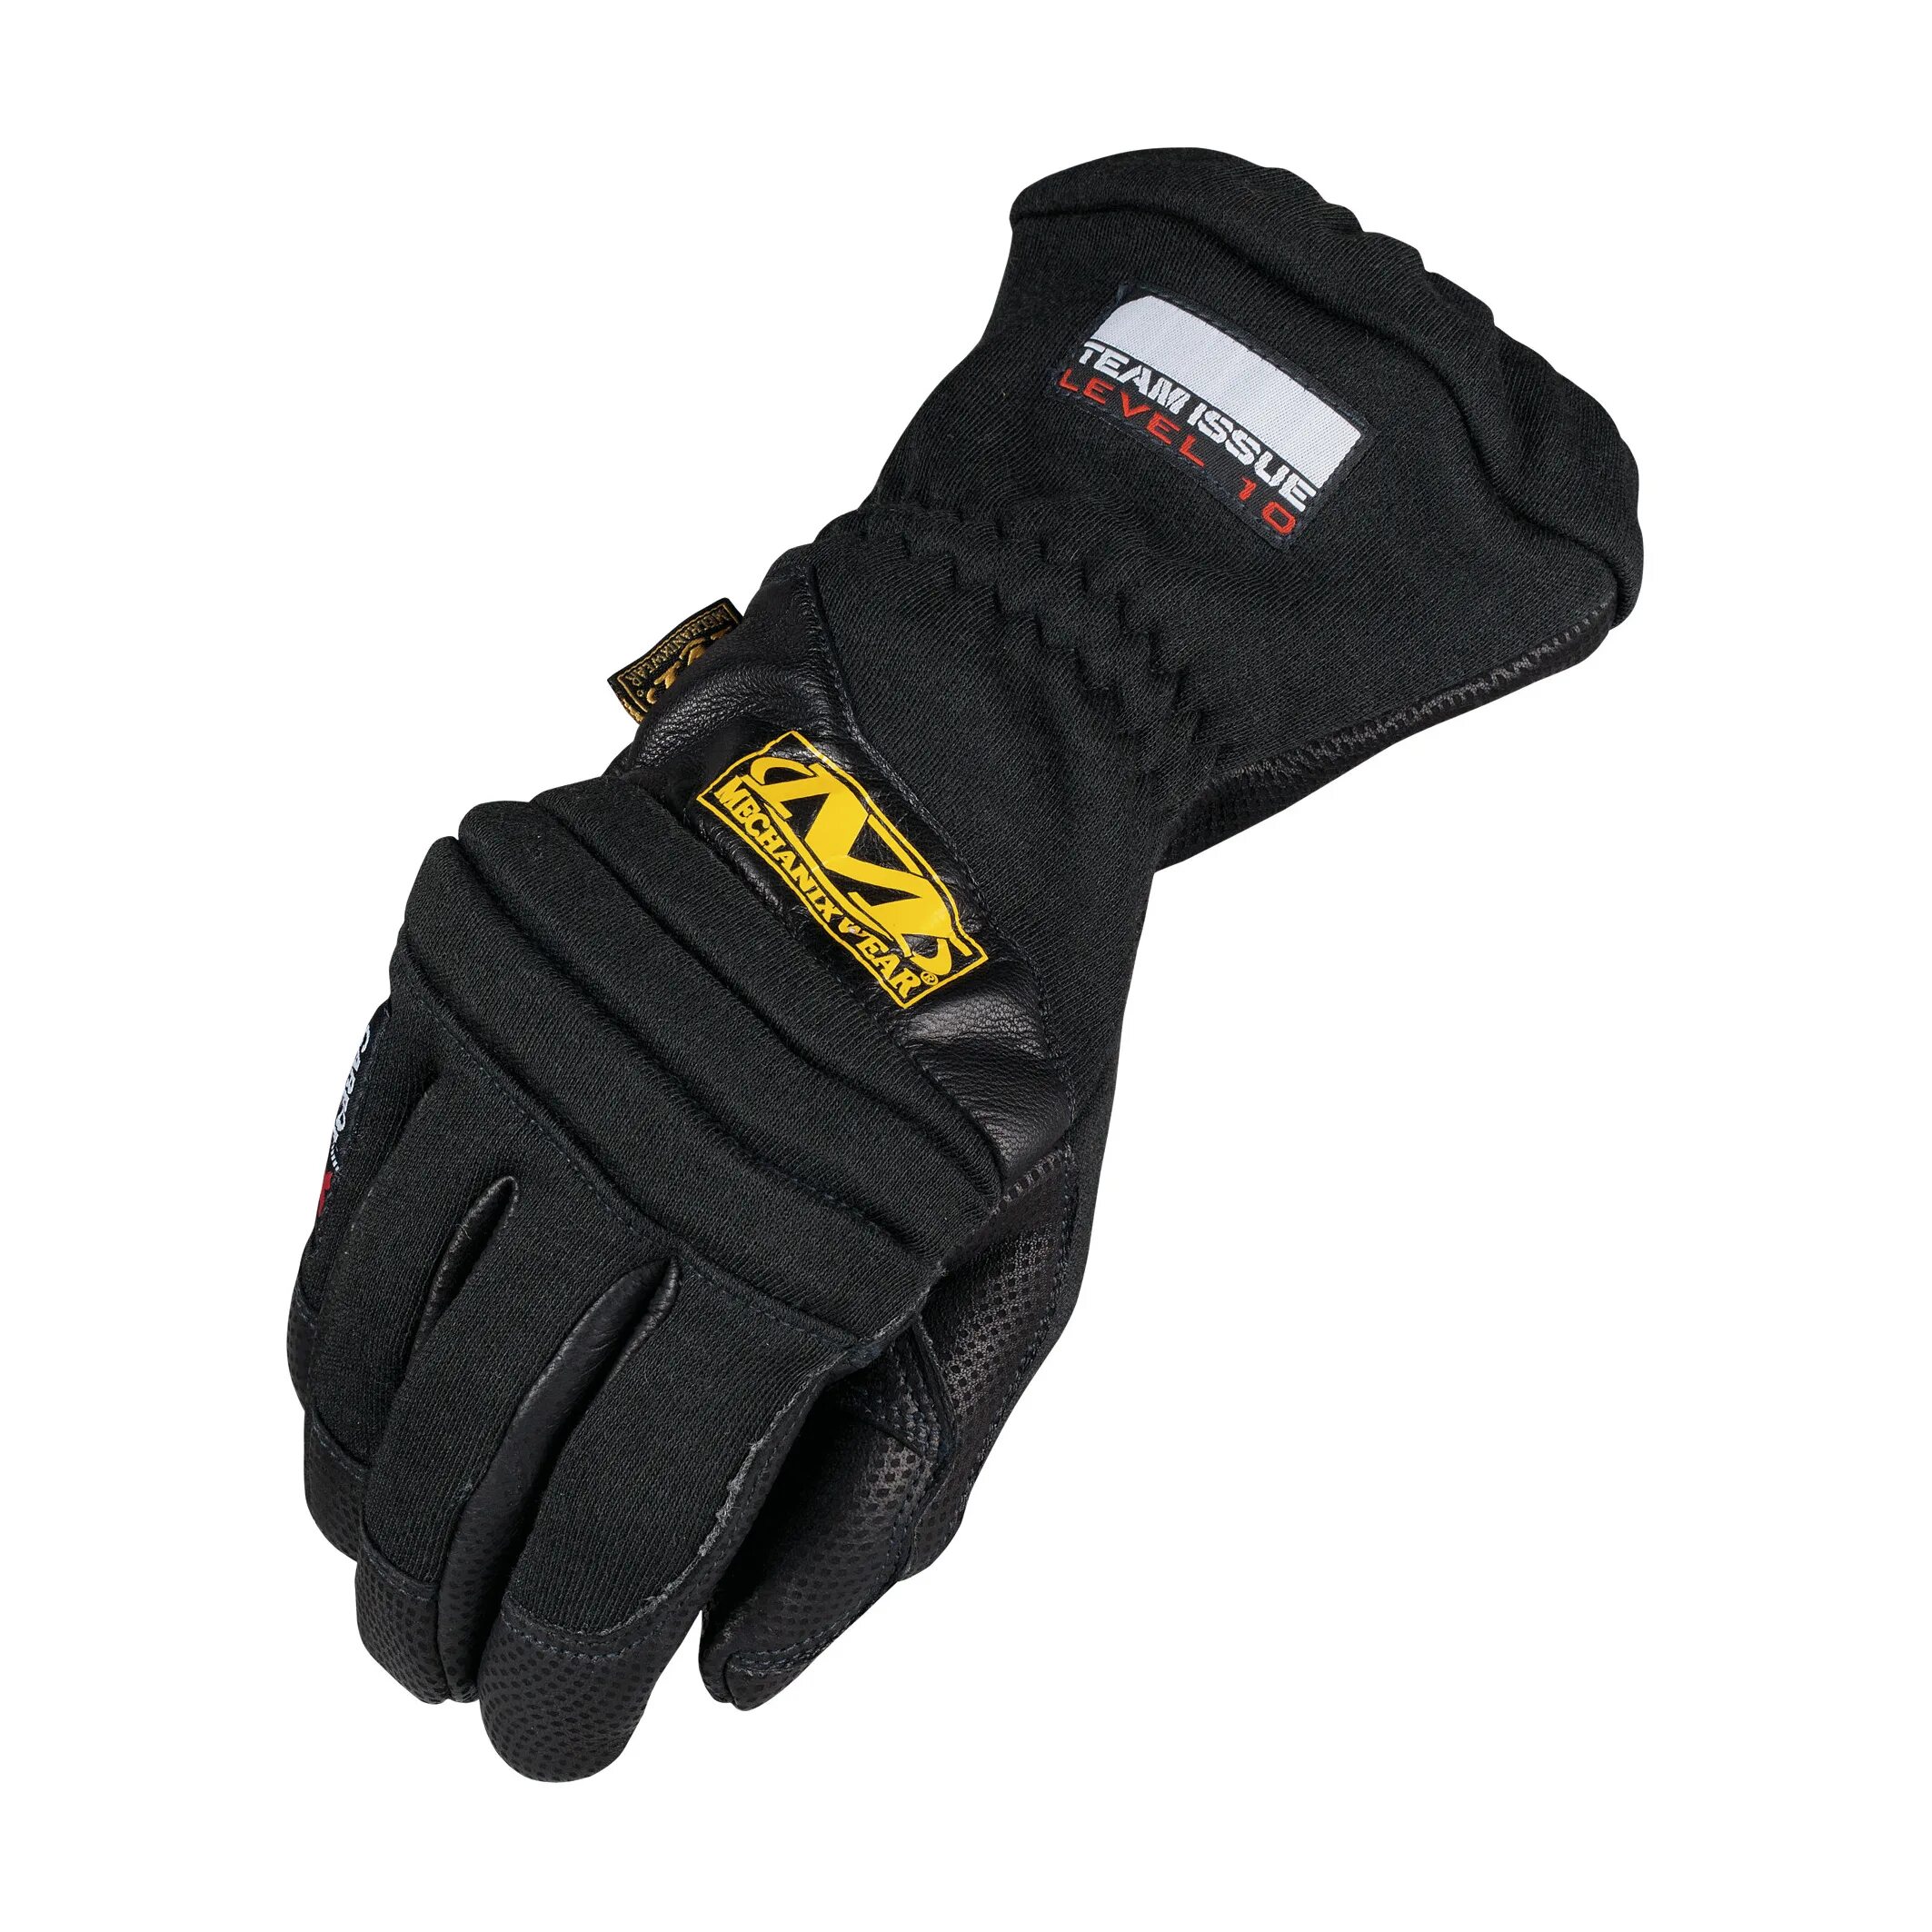 Mechanix Gloves. Mechanix Wear. Перчатки m-Pact Mechanix, цвет Black * MPT-55. Mechanix Knuckle Gloves.